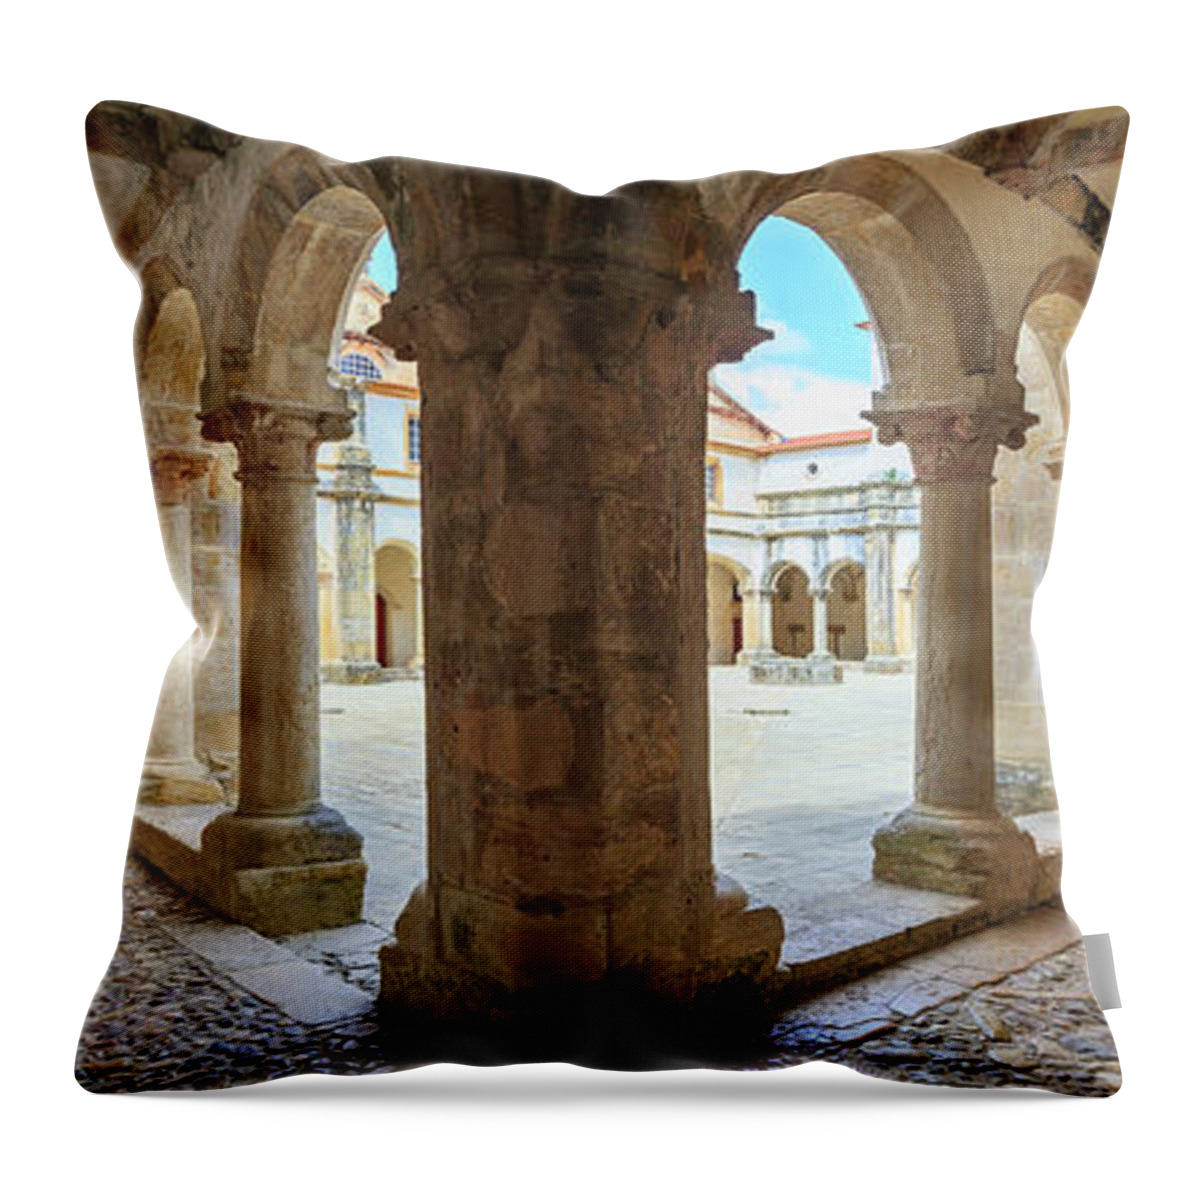 Estock Throw Pillow featuring the digital art Cloister, Tomar, Portugal by Luigi Vaccarella